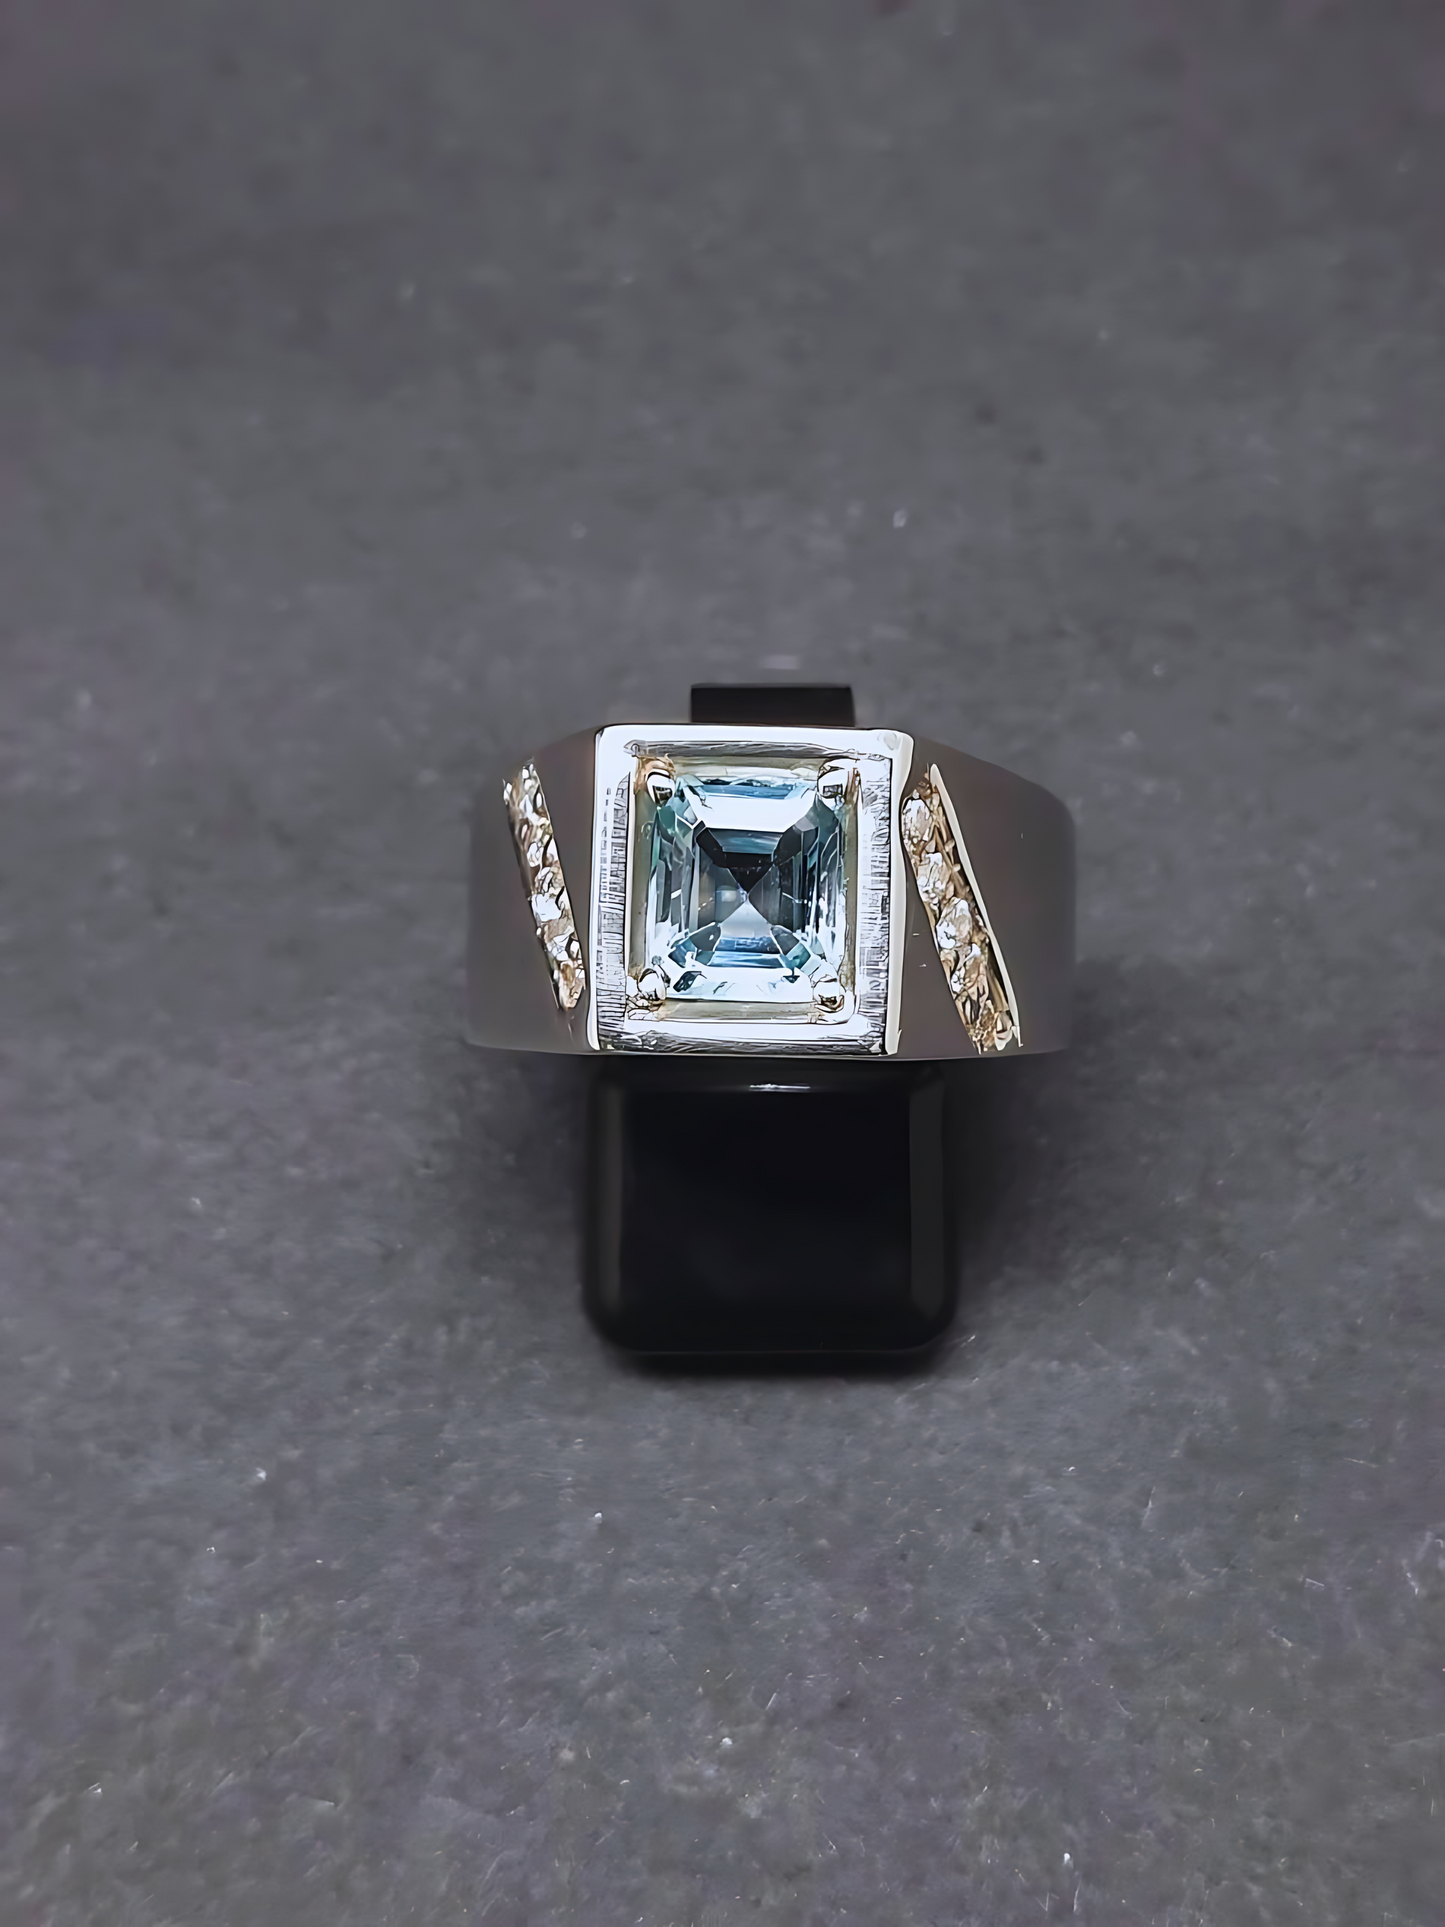 Handmade 18K white gold ring 1.7 ct. natural Aquamarine & natural Vvs1 high quality Diamonds.